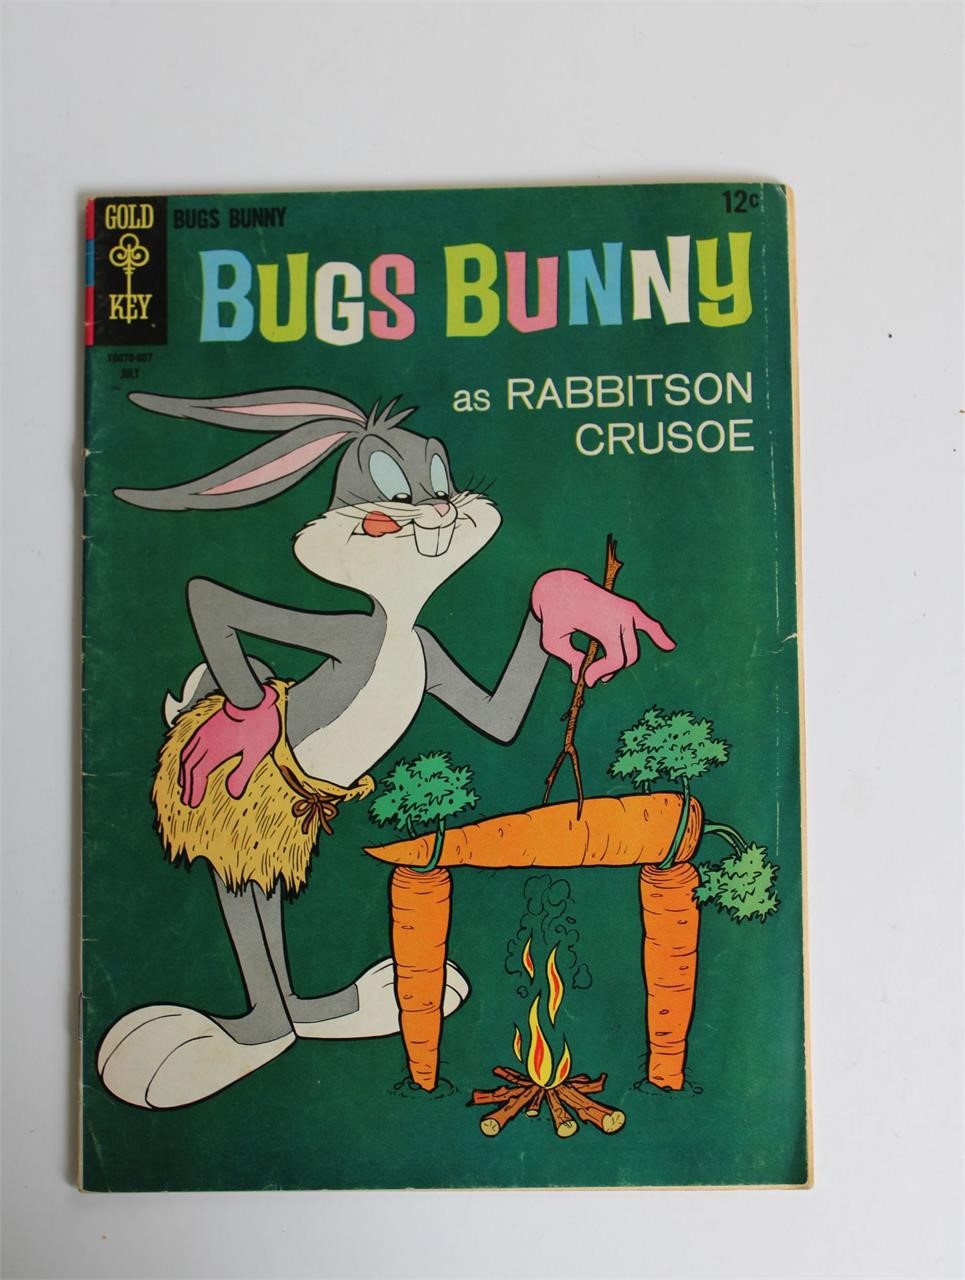 Gold Key Bugs Bunny Comic book